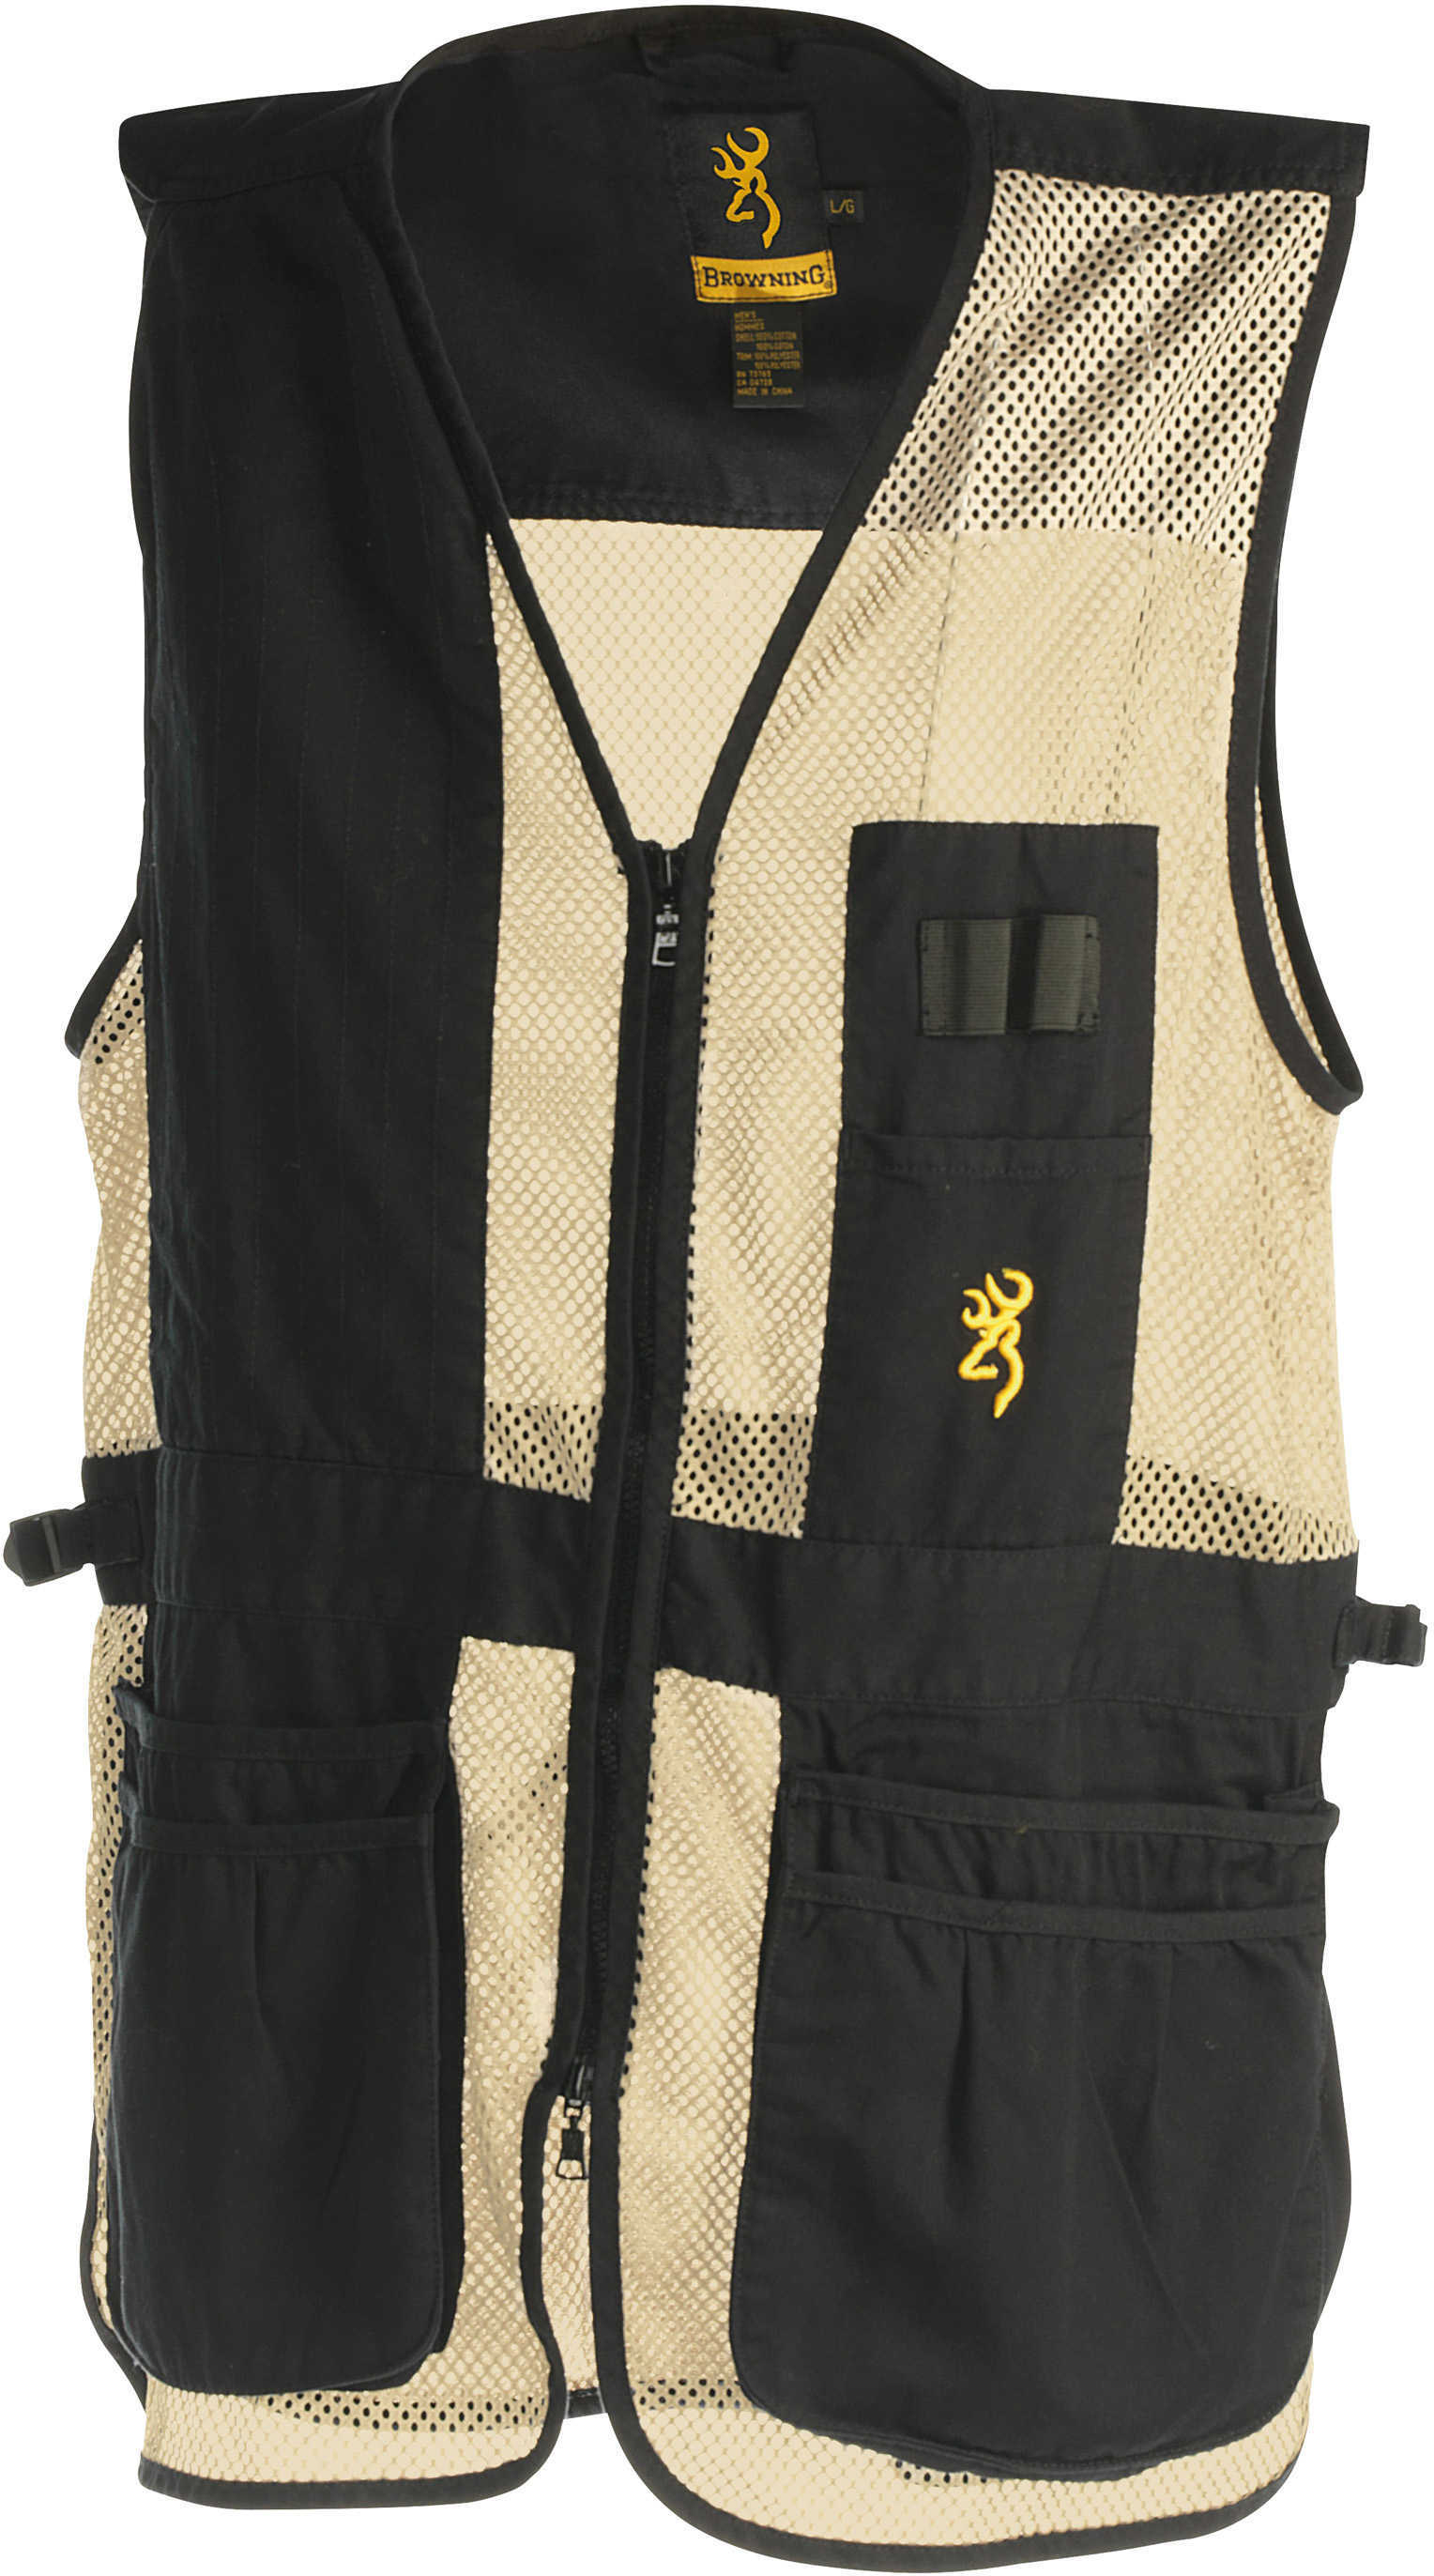 BG Trapper Creek Shooting Vest Black/Tan 2Xl